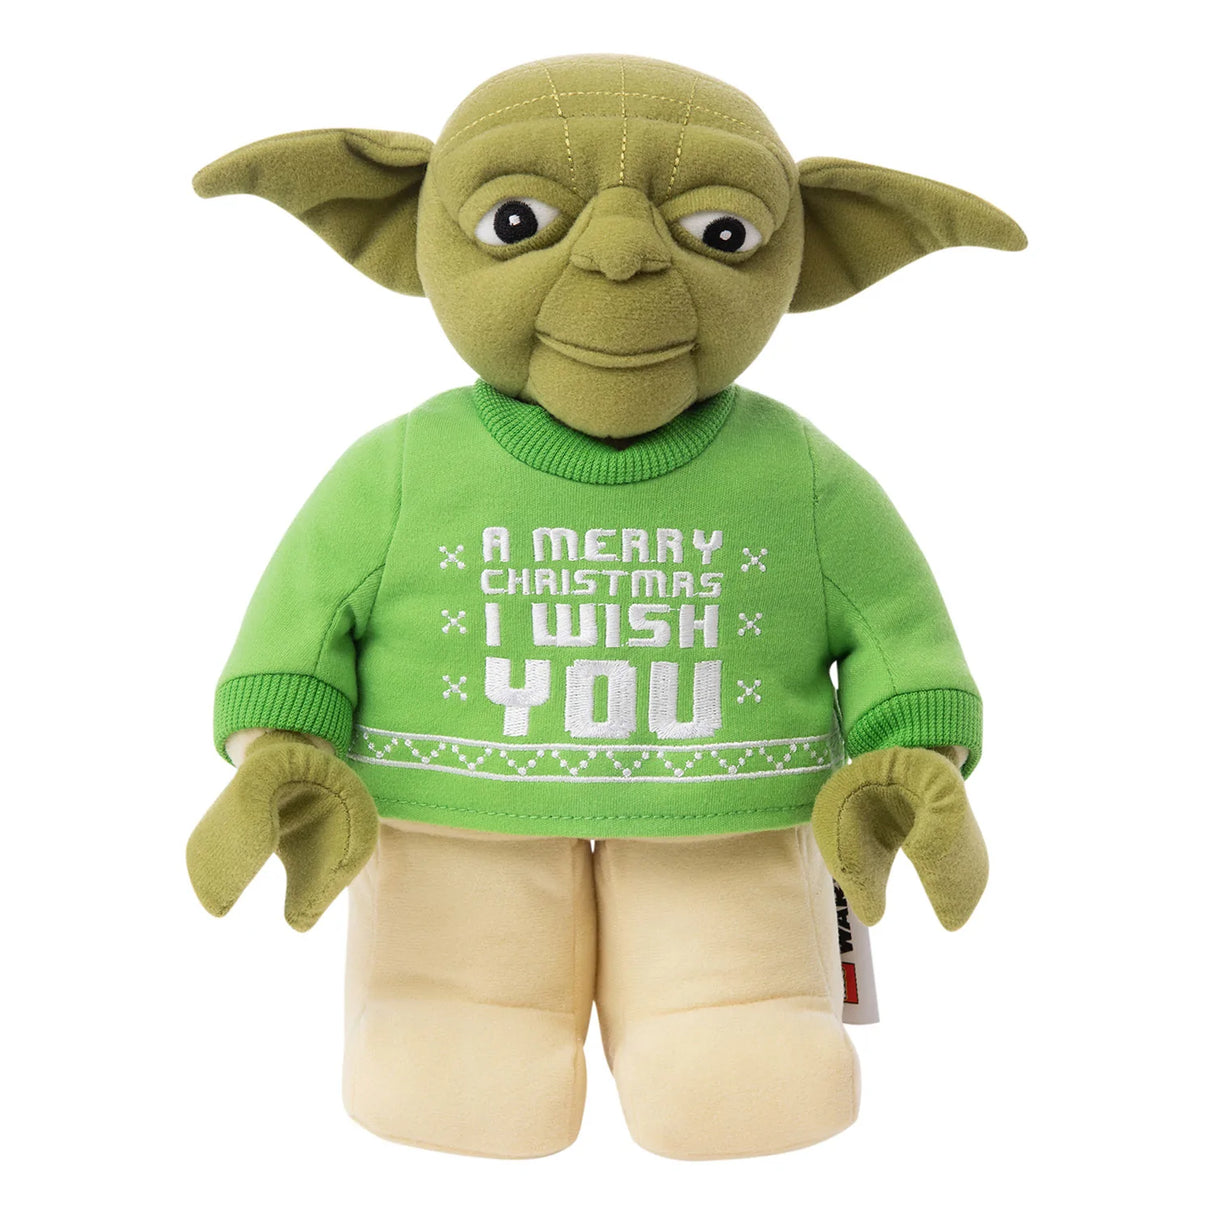 Lego Christmas Yoda